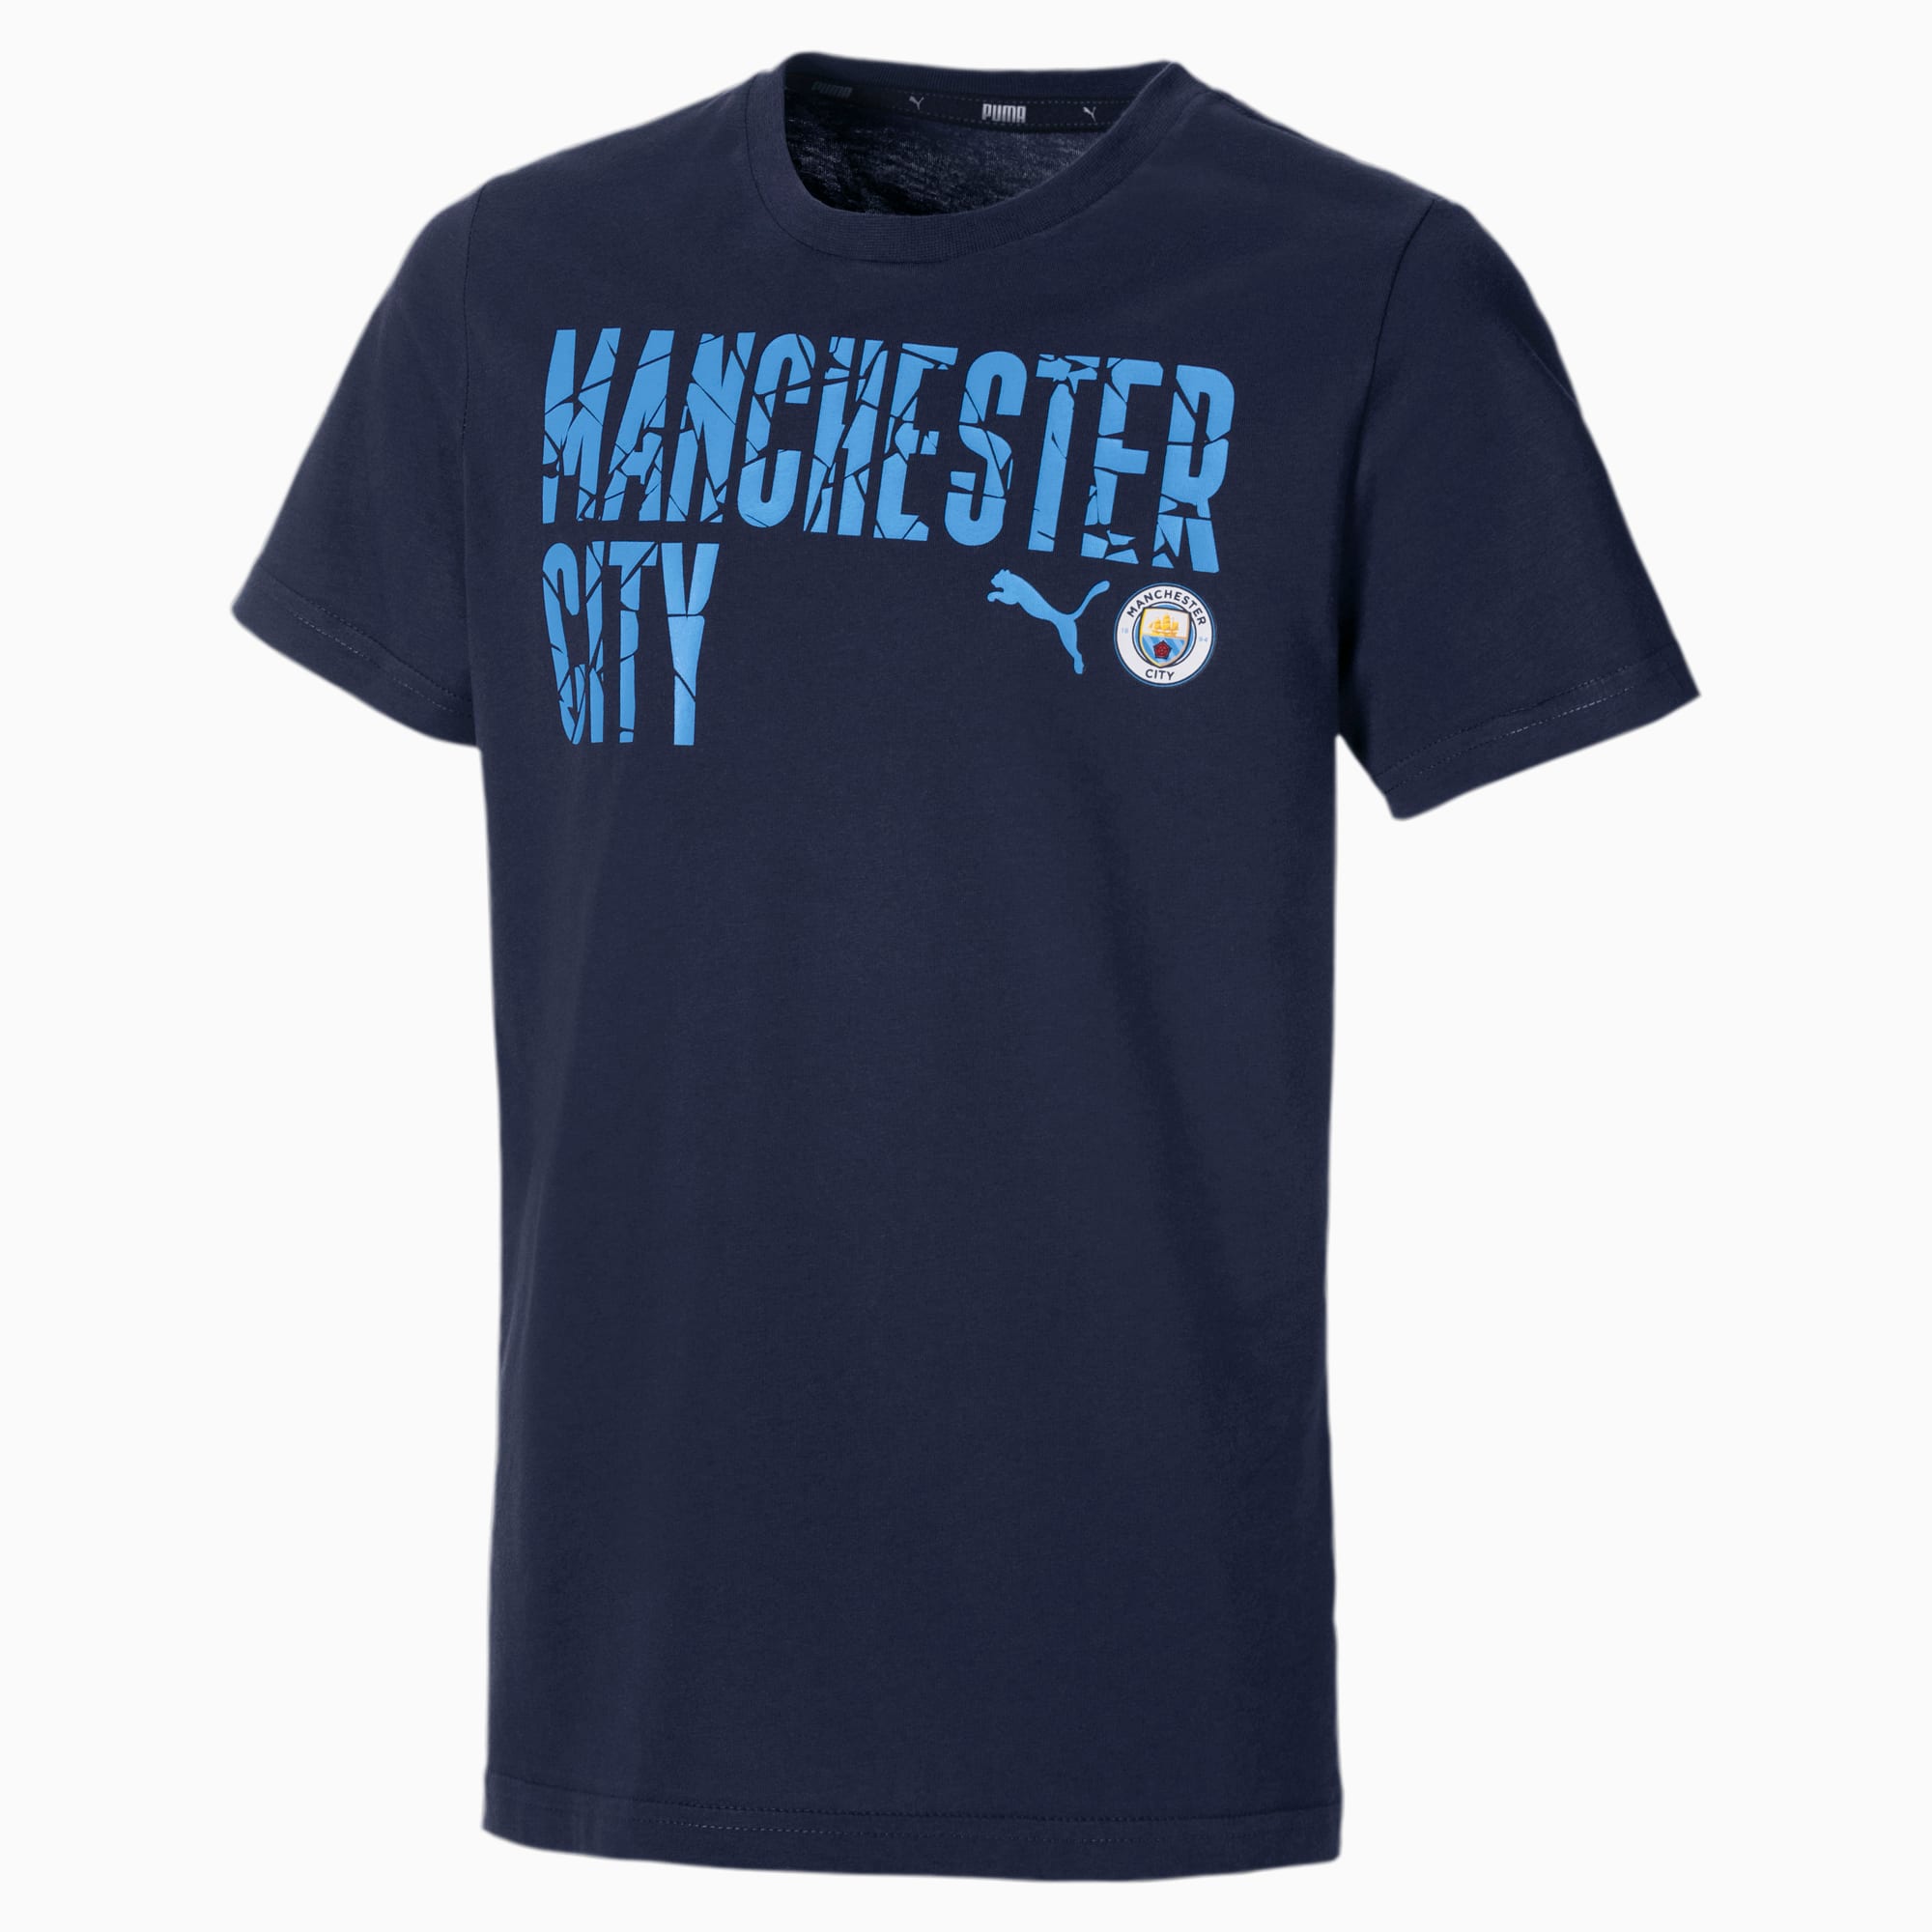 PUMA T-Shirt Man City ftblCORE Wording Football pour garçon, Bleu, Taille 110, Vêtements